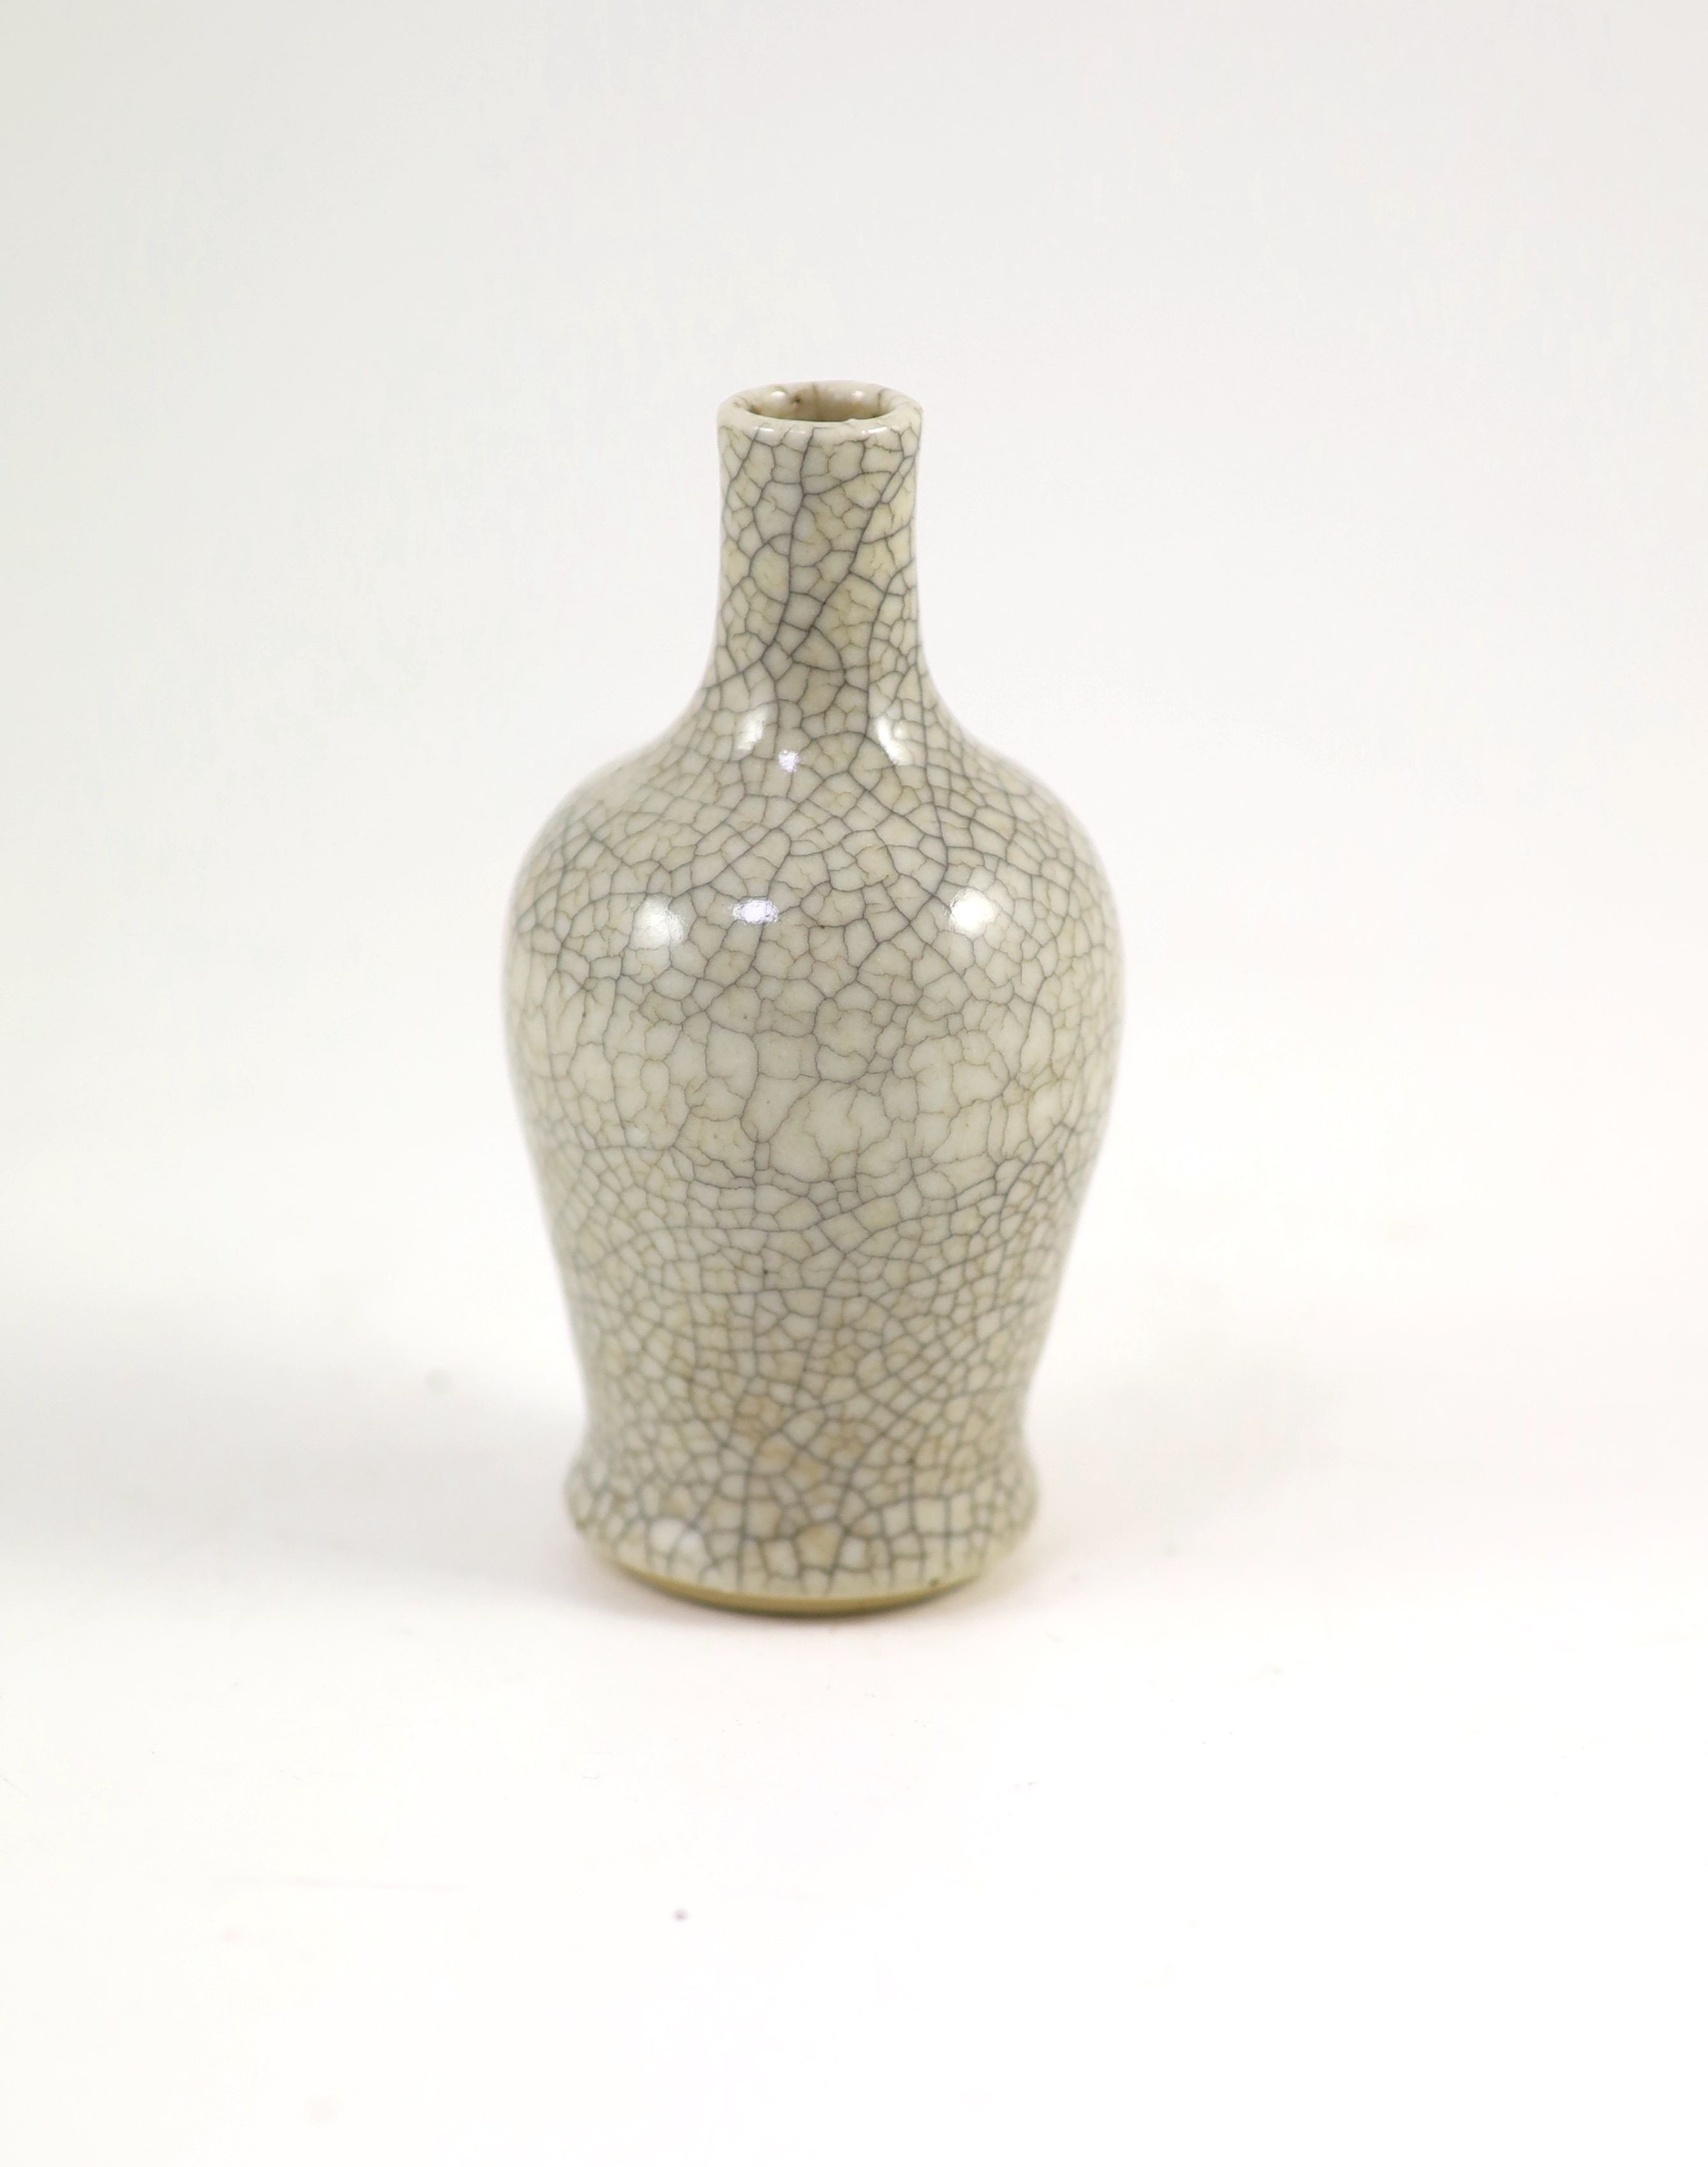 A Chinese cream crackle glazed porcelain vase, 18th century, 11.2 cm high